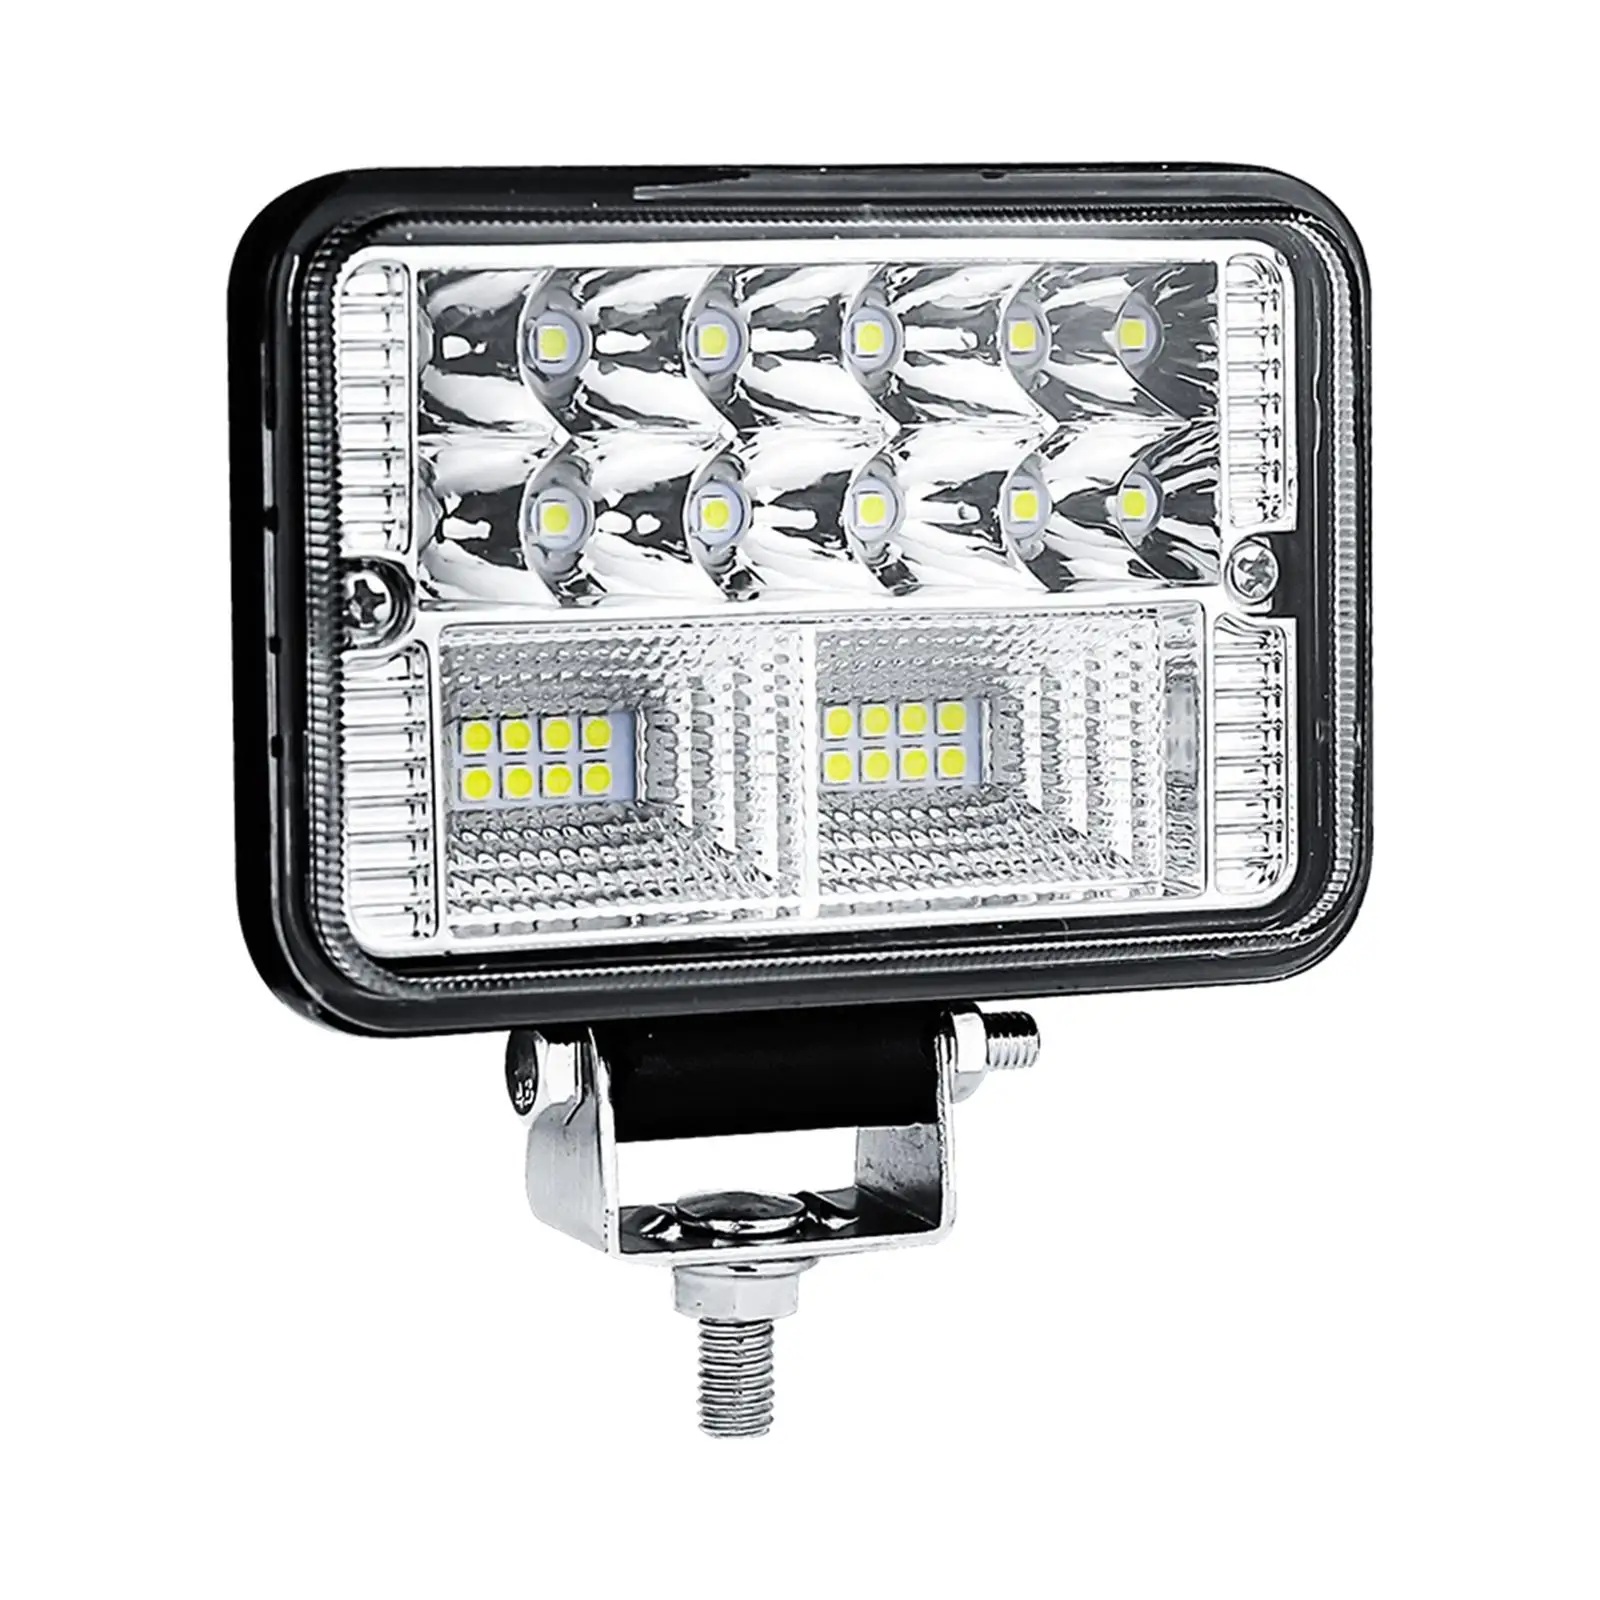 Truck LED Spotlight 78W 6000K Aluminum Alloy Shell Headlights Work Light 6000LM Light Bar for Motorbike Driving SUV Cars Marine